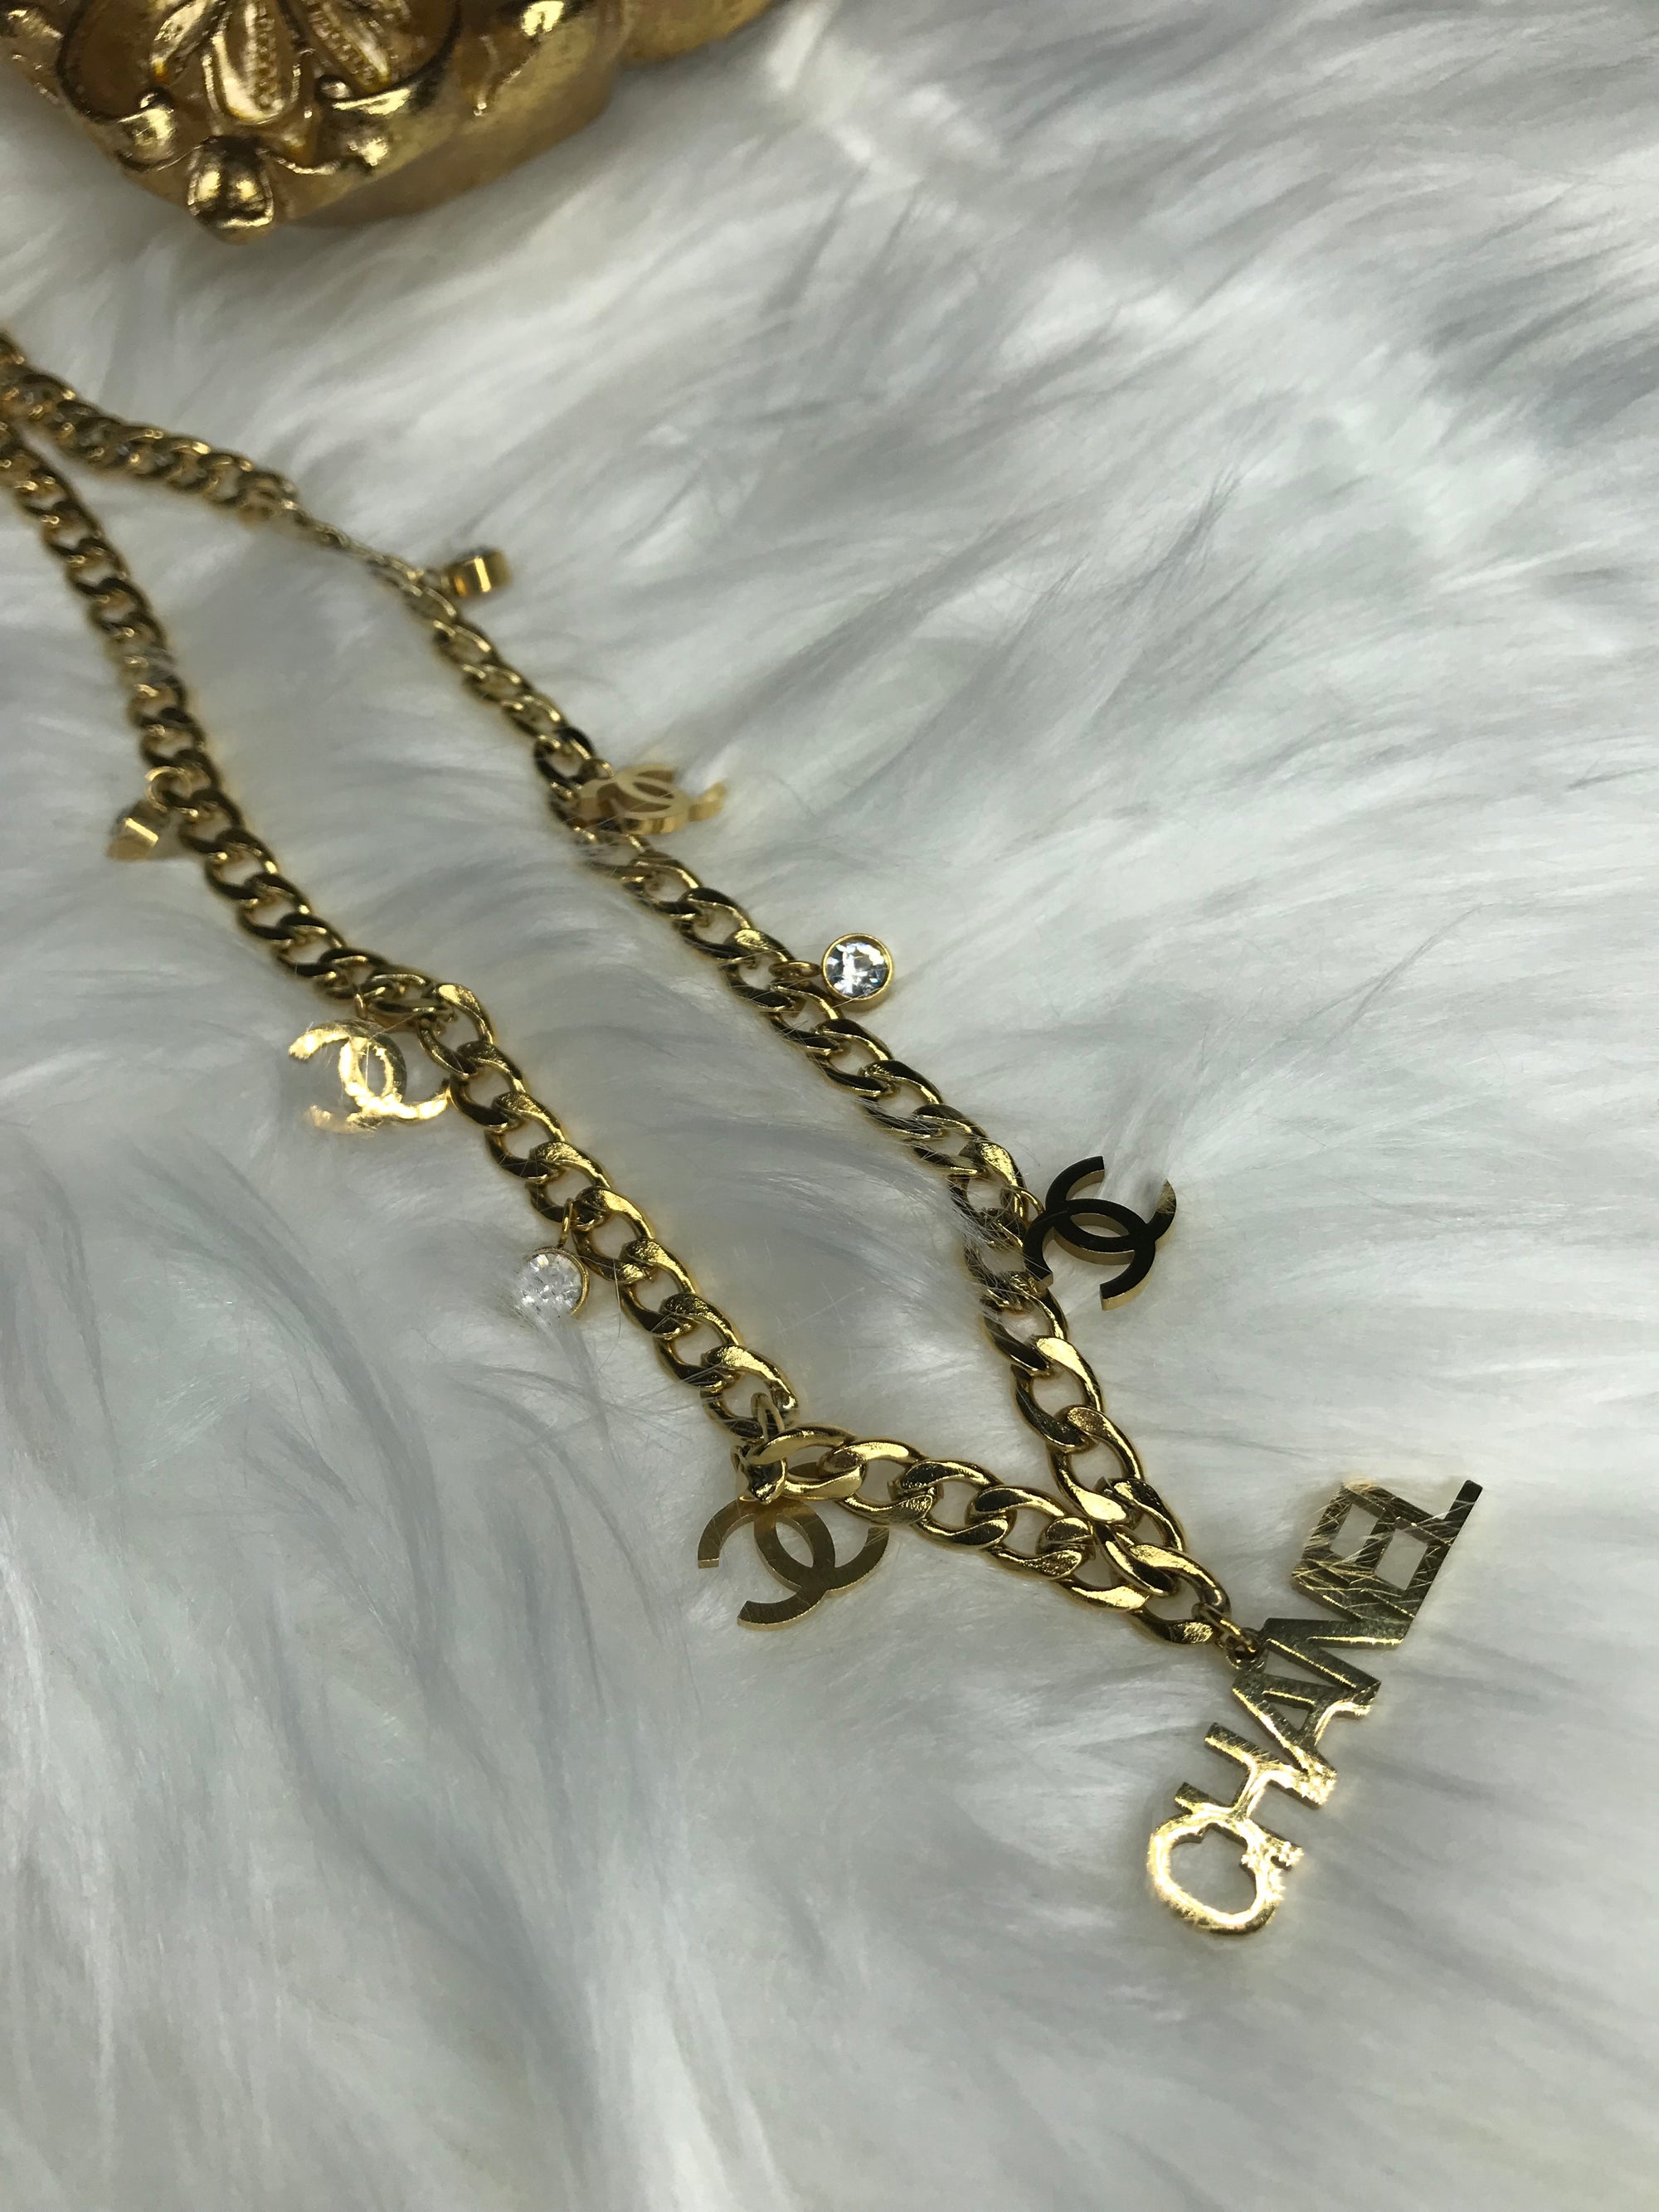 Vintage Chanel Jewelry